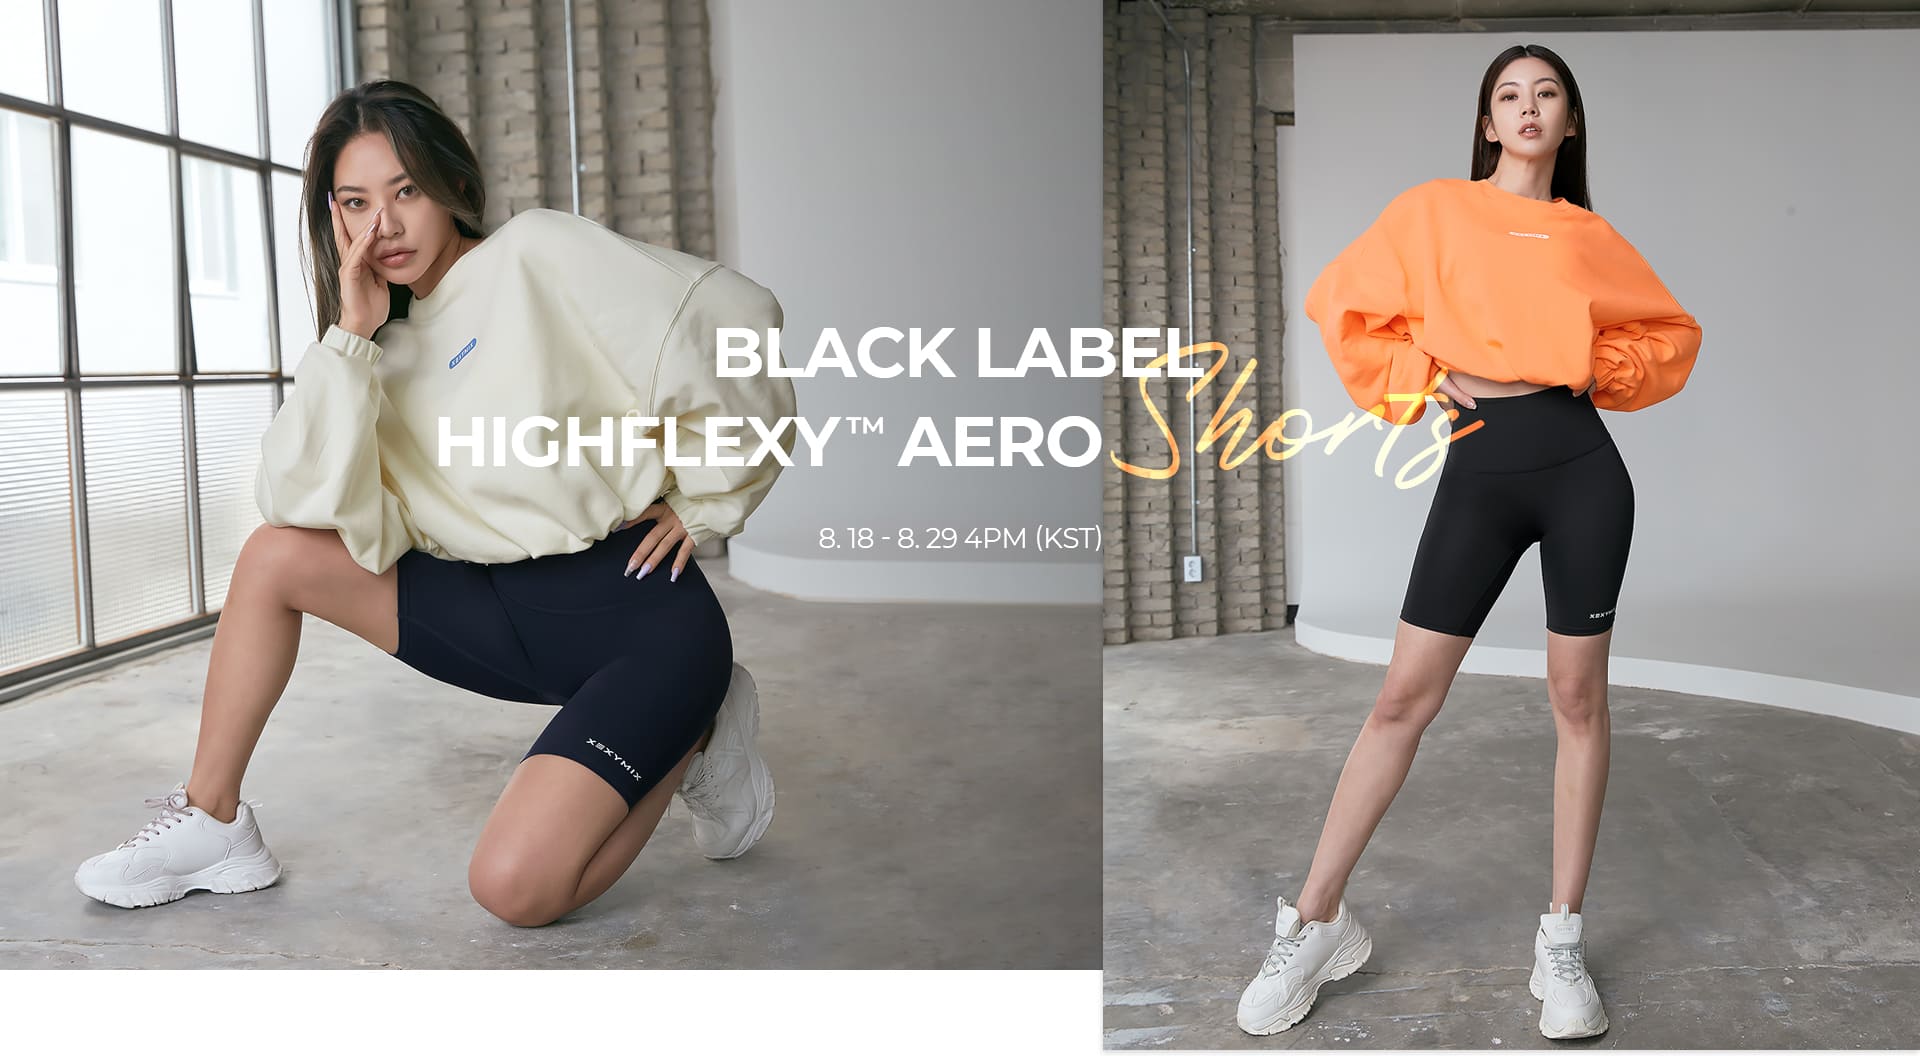 black label Highflexy shorts event